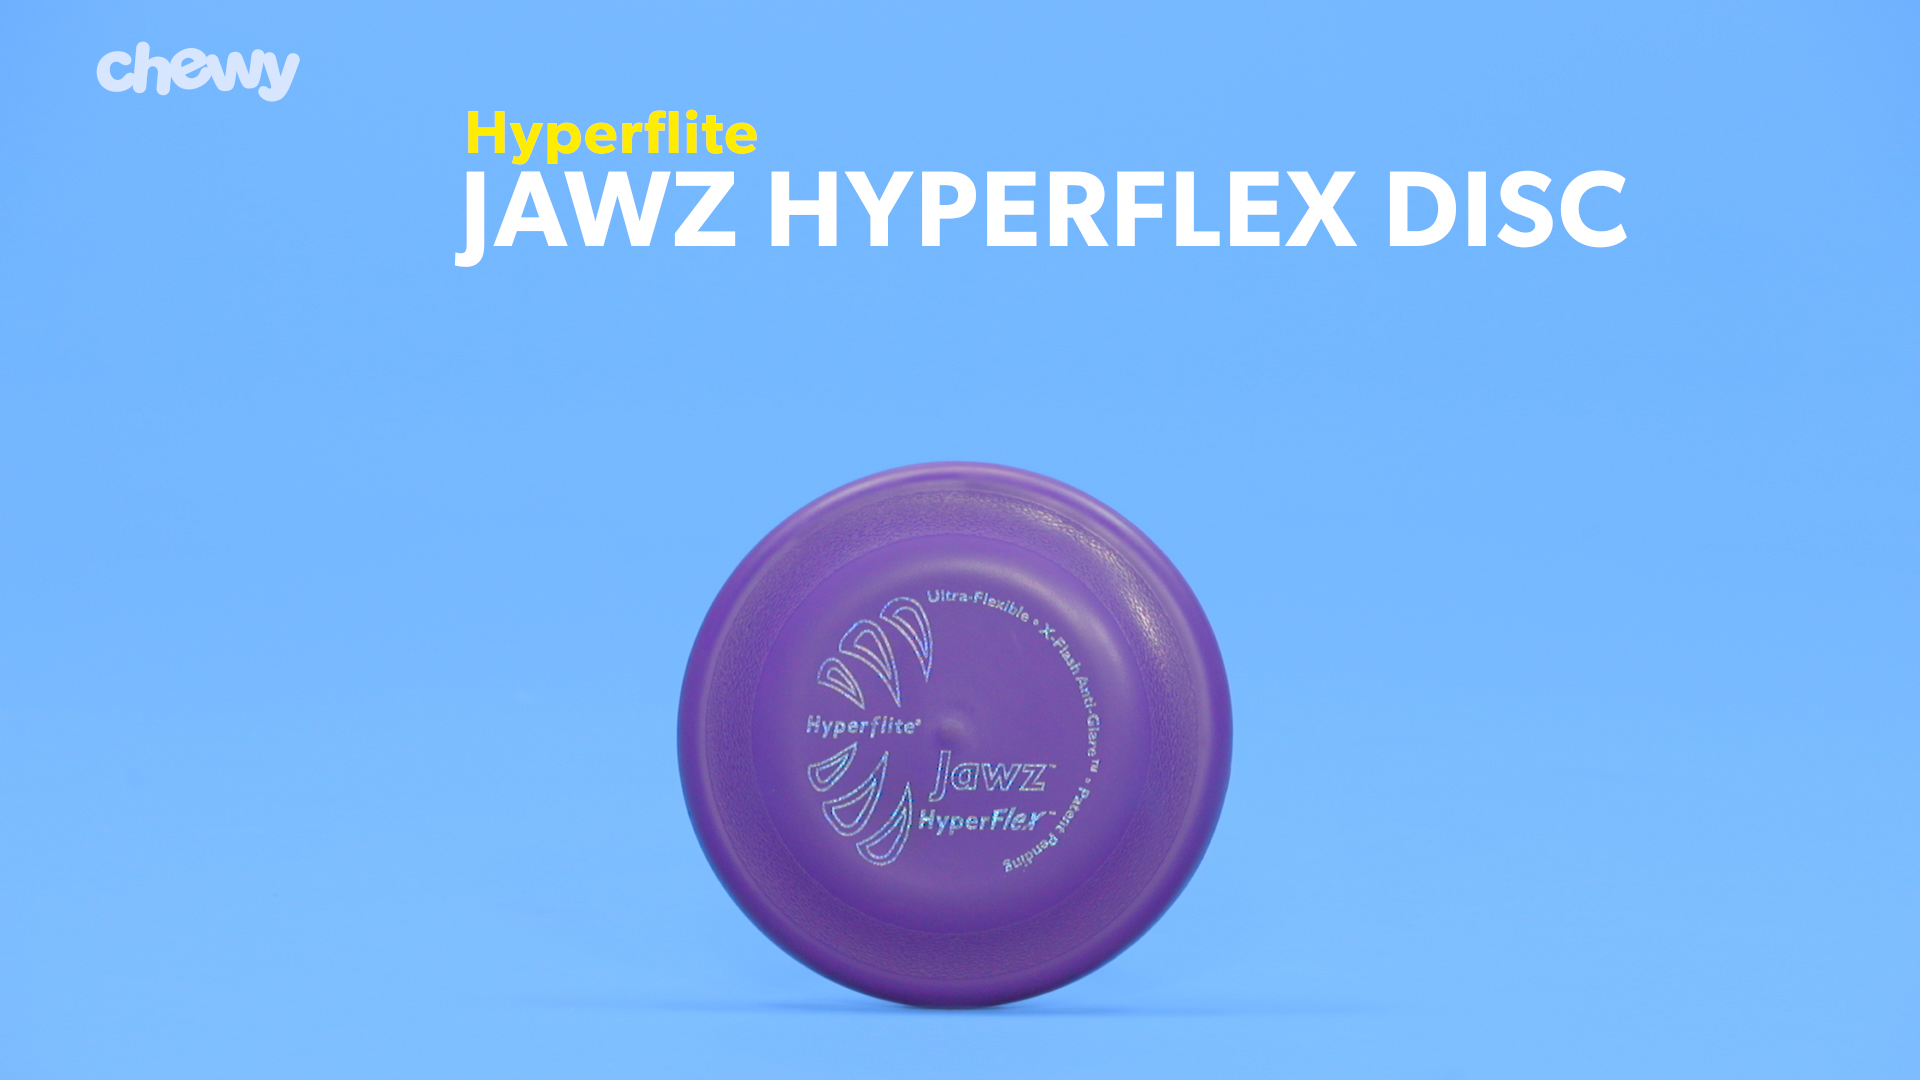 Hyperflex Hyperflite Jawz Dog Disc Puncture Resistant Dog Frisbee US Made Flyer 